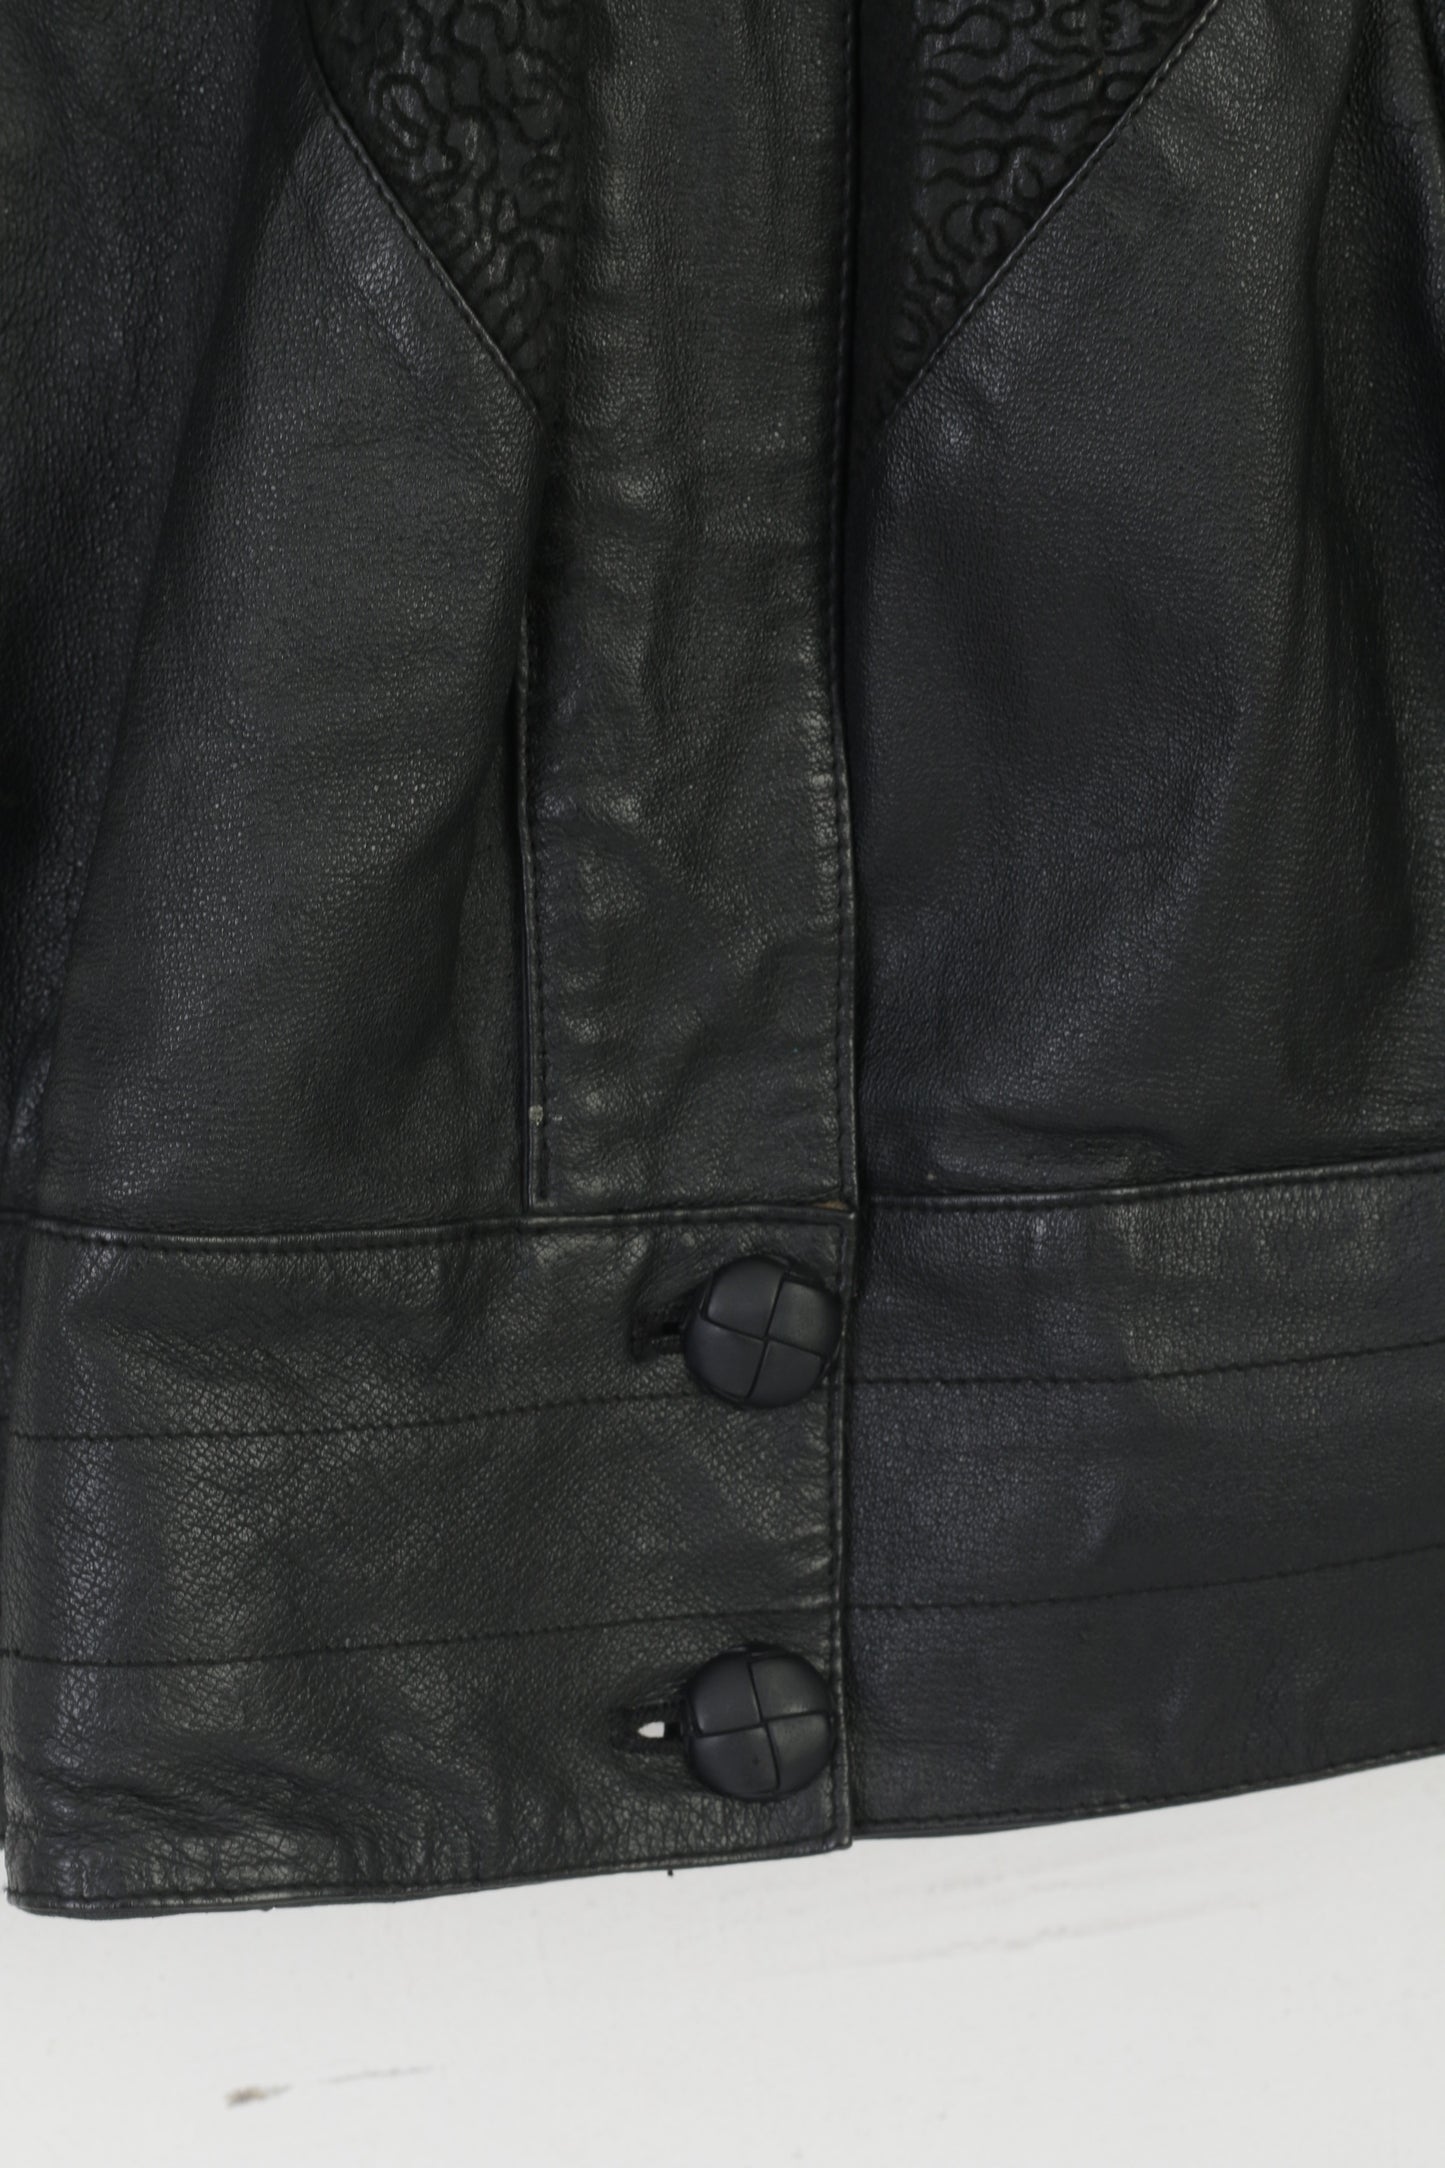 Vintage Women XL Jacket Black Leather Bat Bomber Shoulder Pads Retro Top